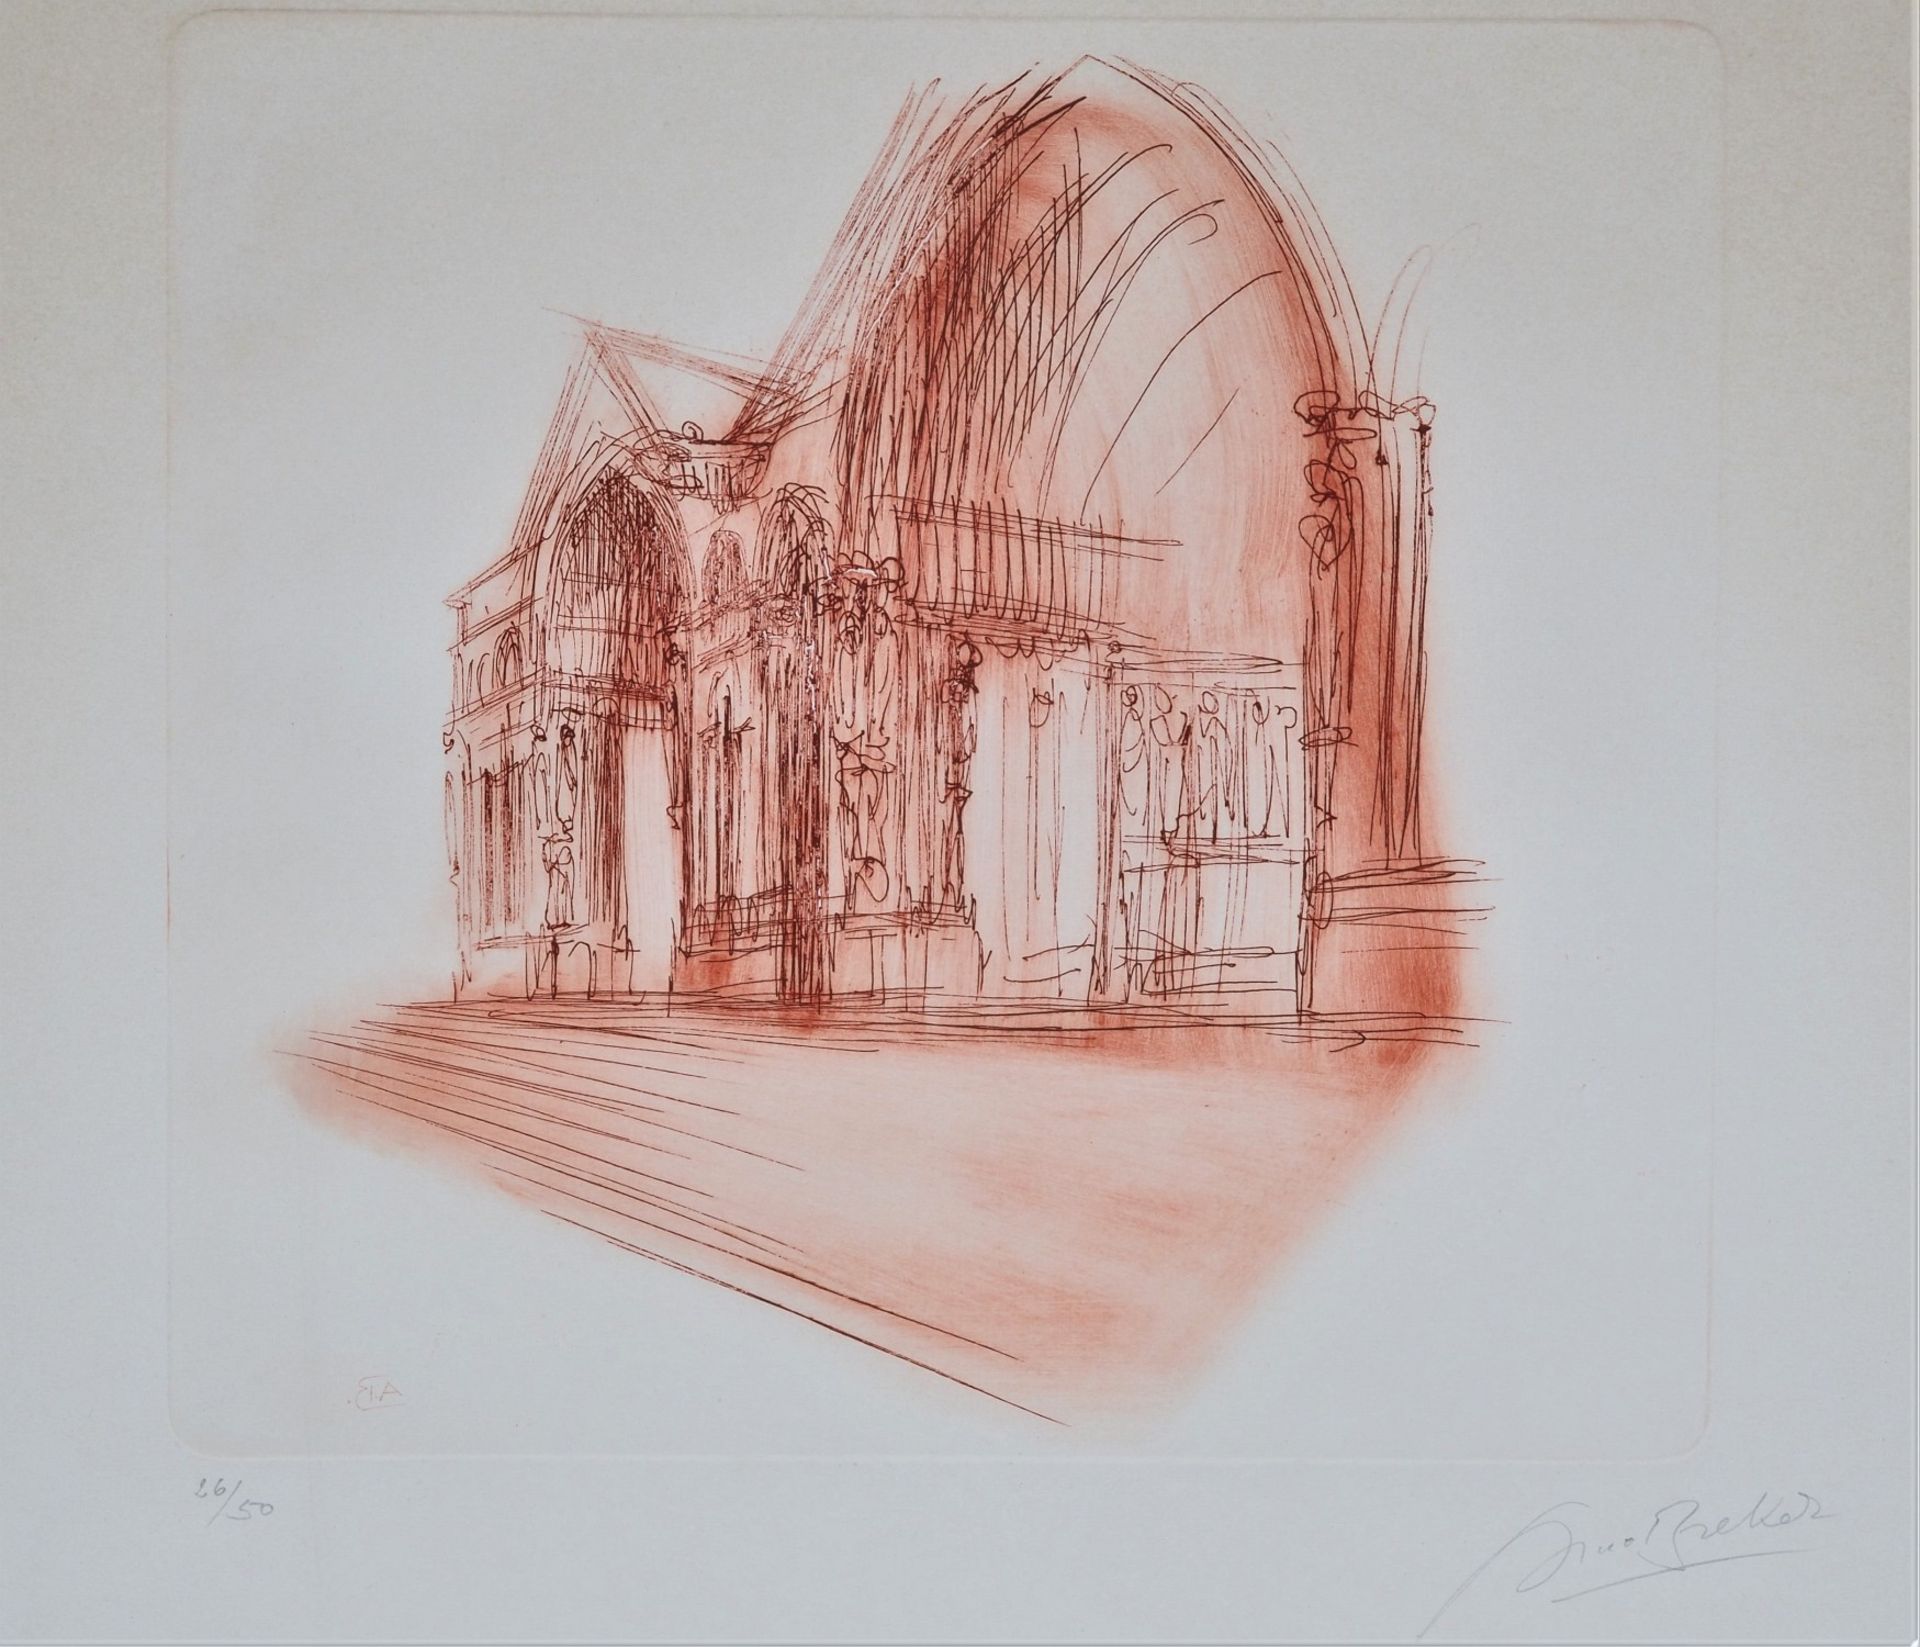 Arno Breker (1900, Wuppertal - 1991, Düsseldorf) - etching church portal.